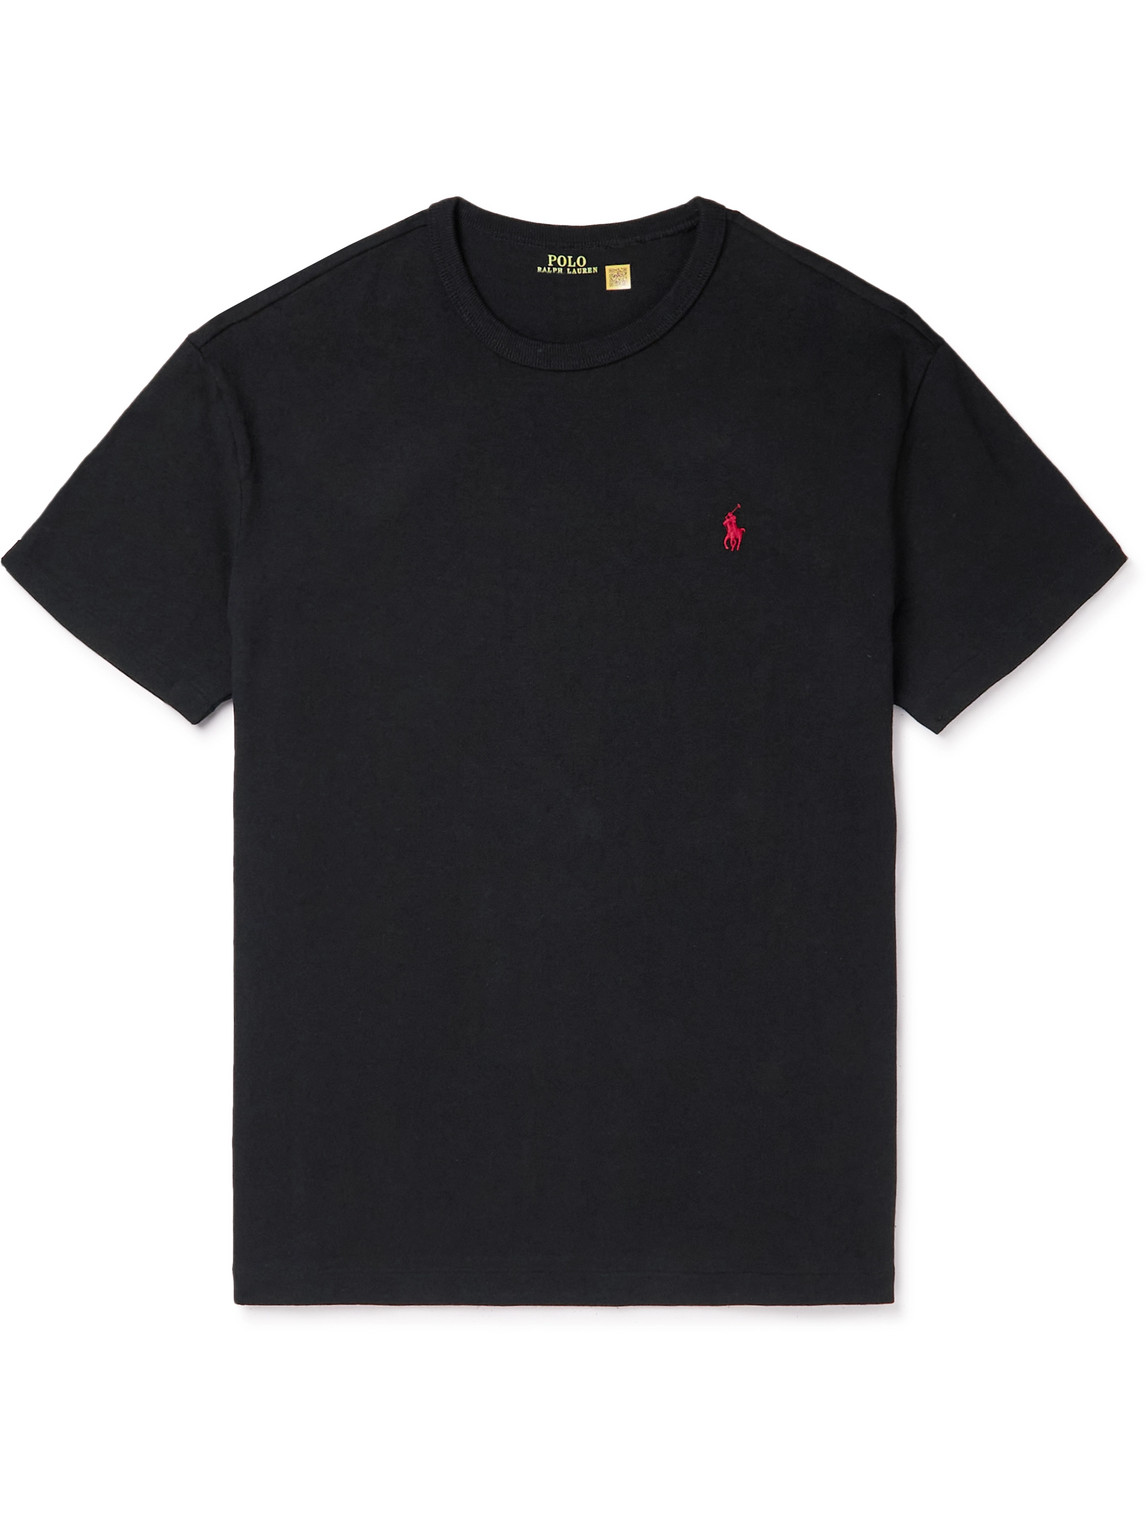 Polo Ralph Lauren - Logo-Embroidered Cotton-Jersey T-Shirt - Men - Black - XS von Polo Ralph Lauren